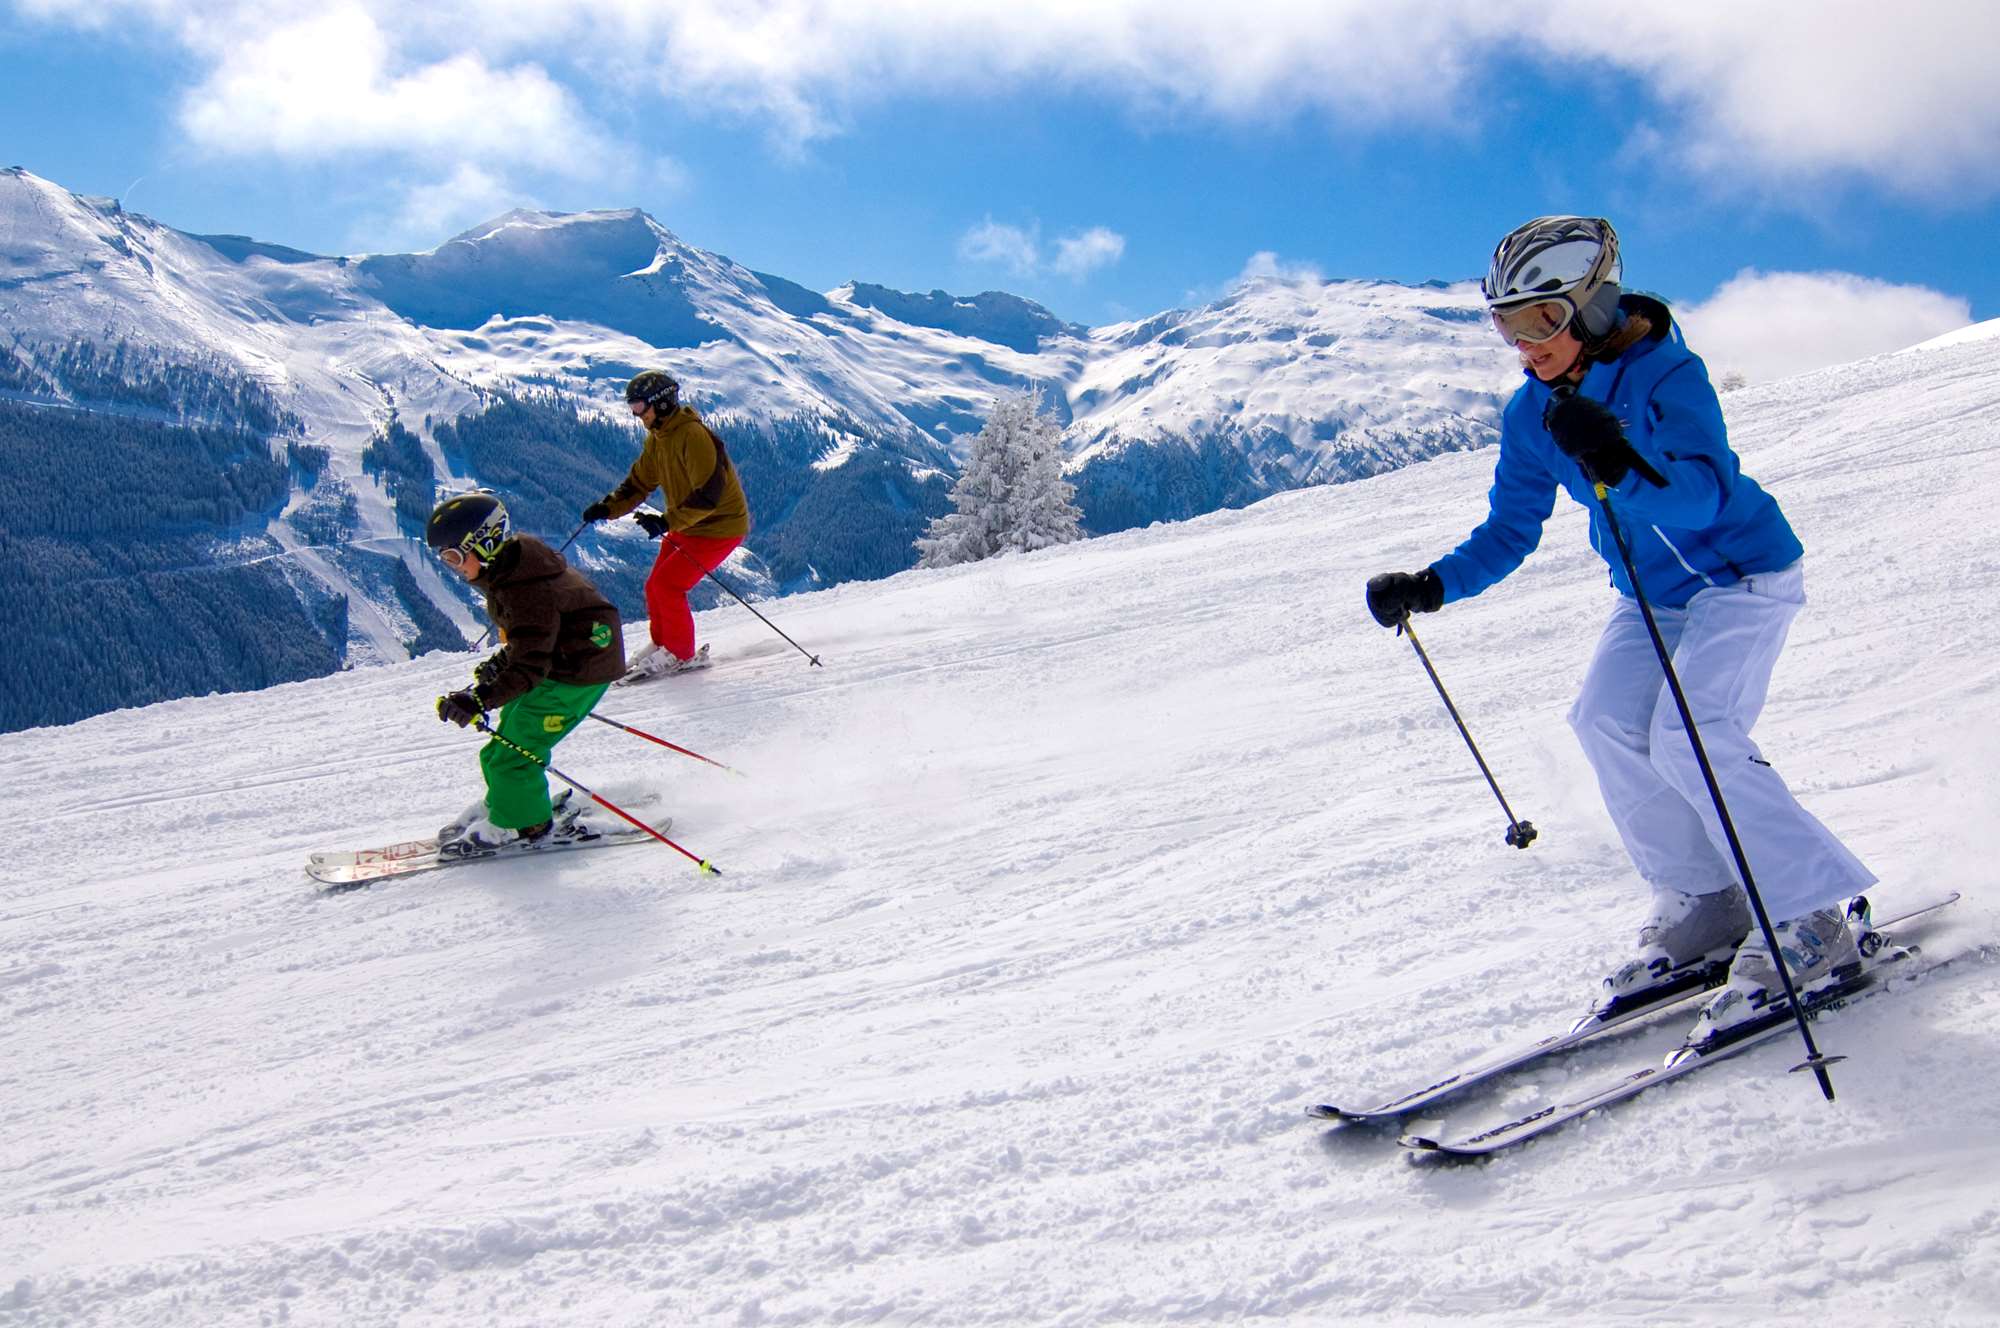 Skiing in Bad Gastein